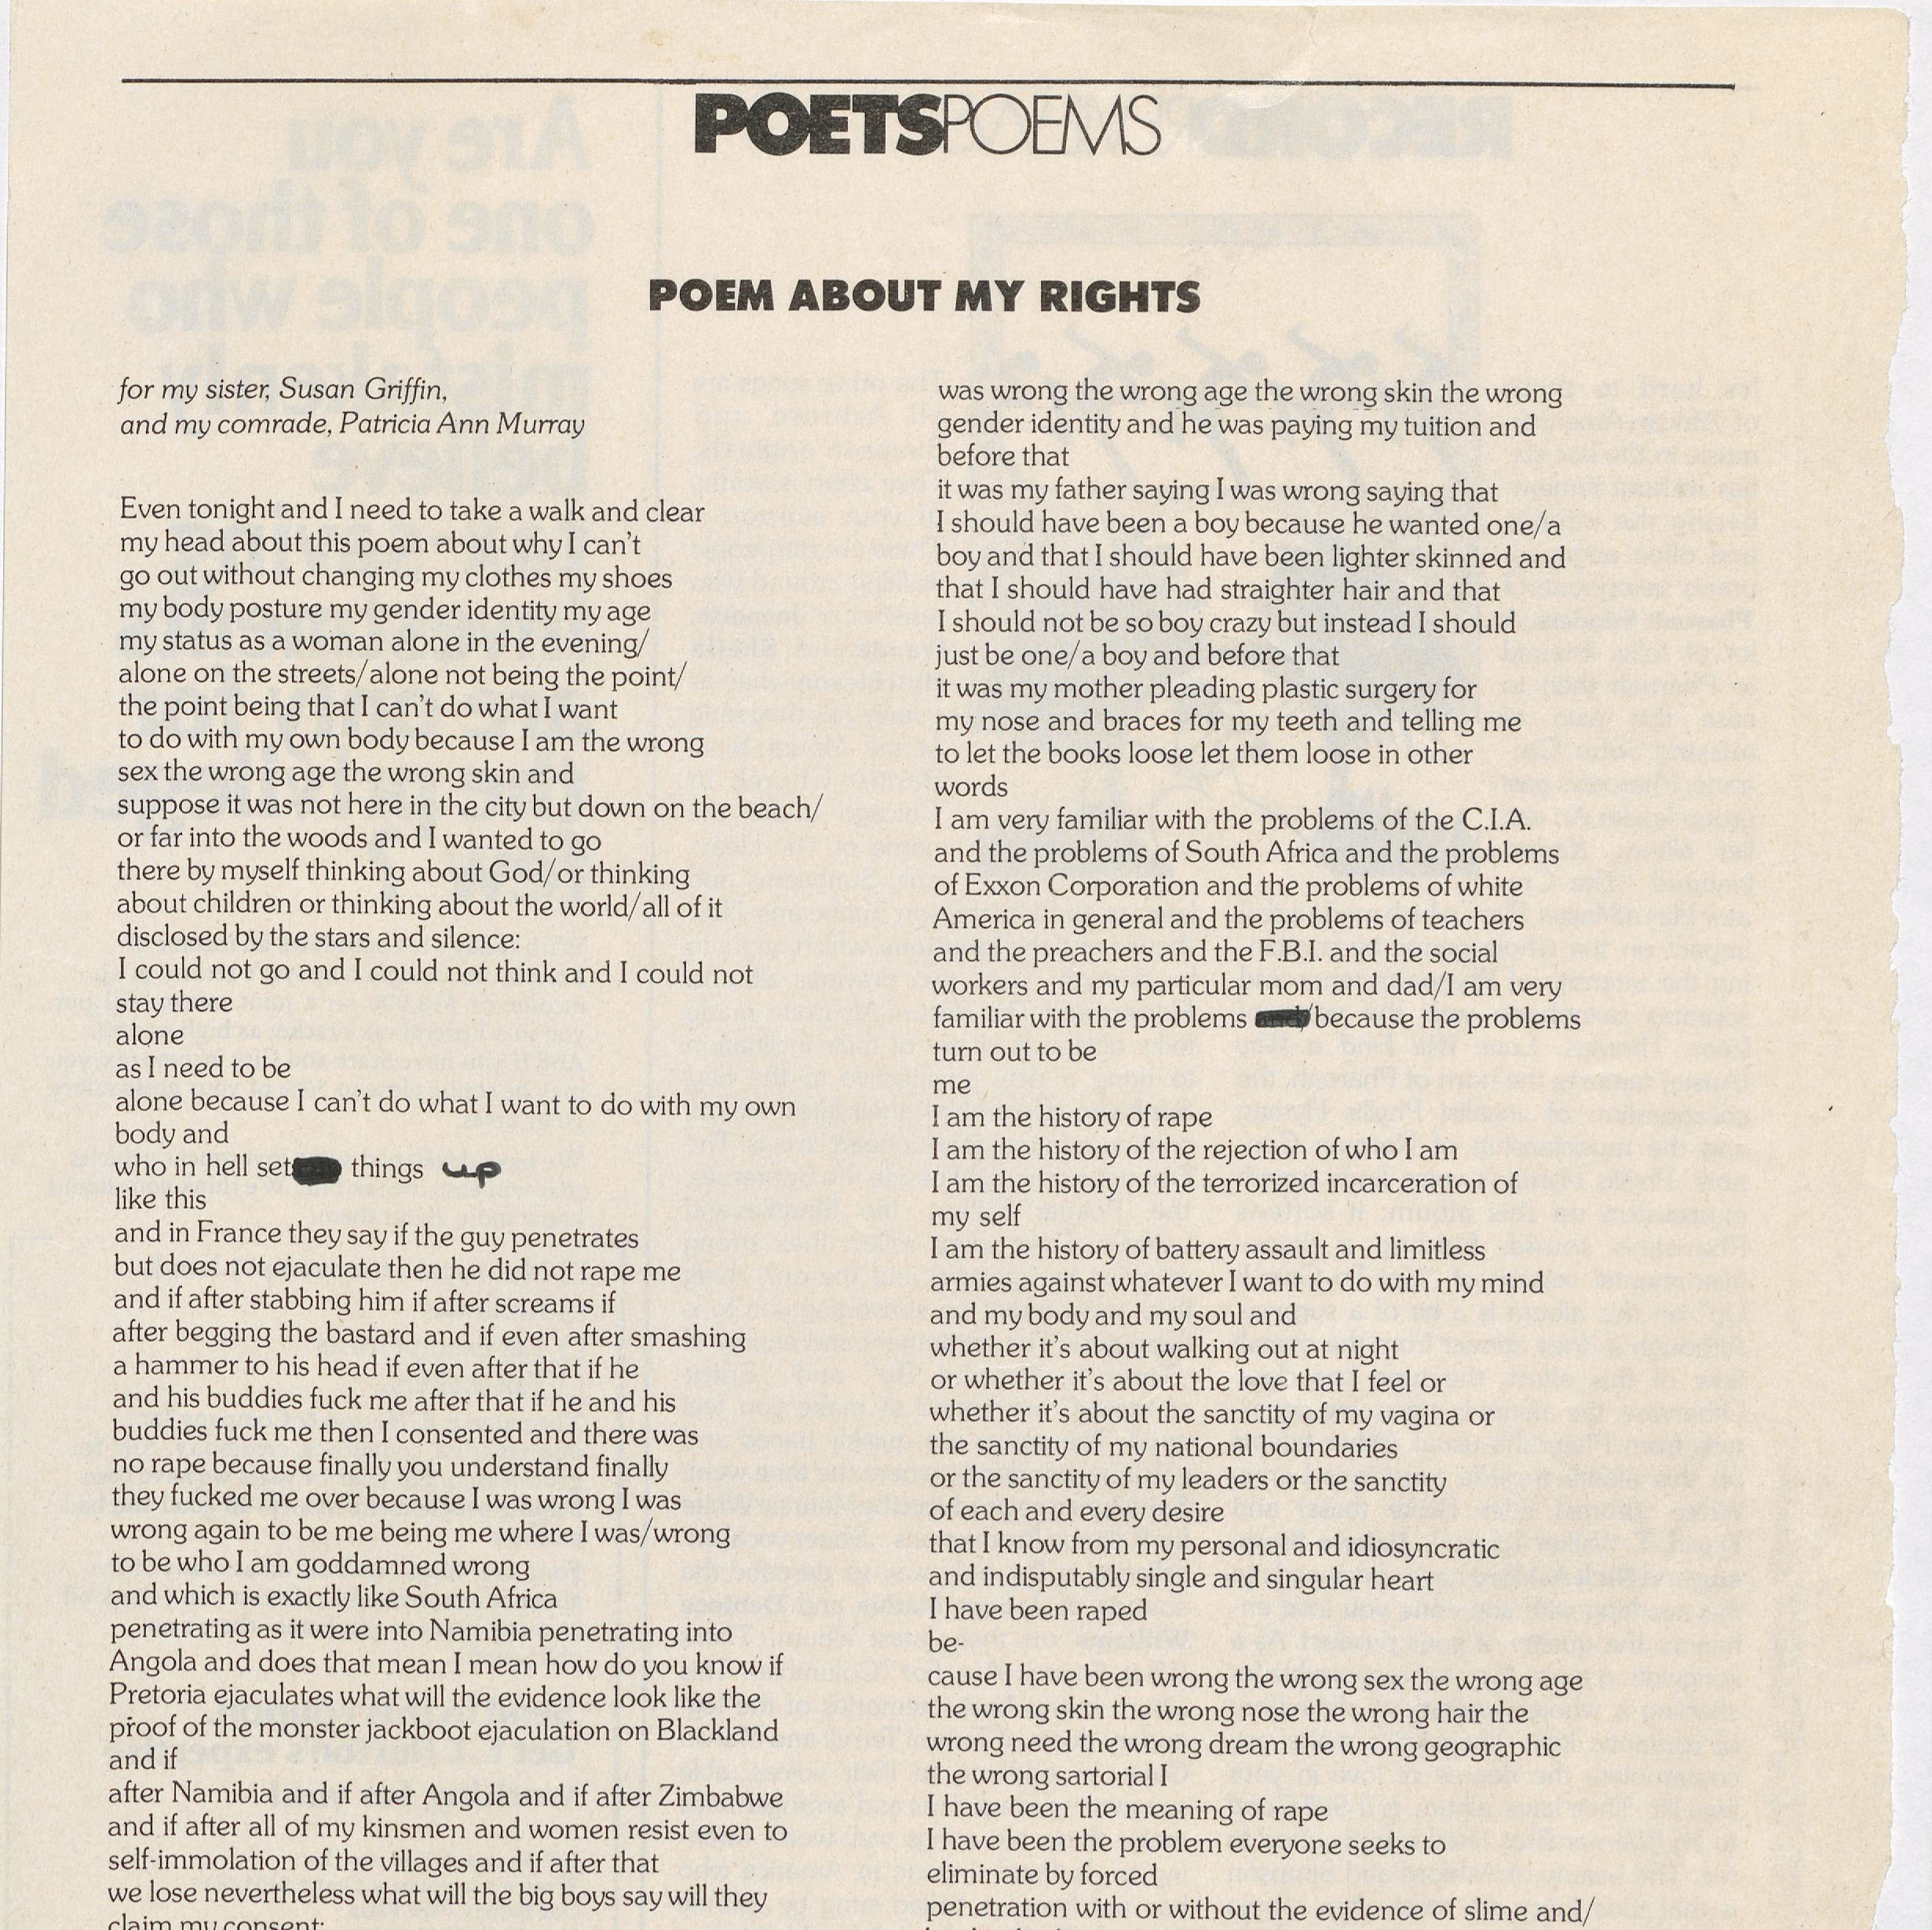 Poem by June Jordan in Essence Magazine